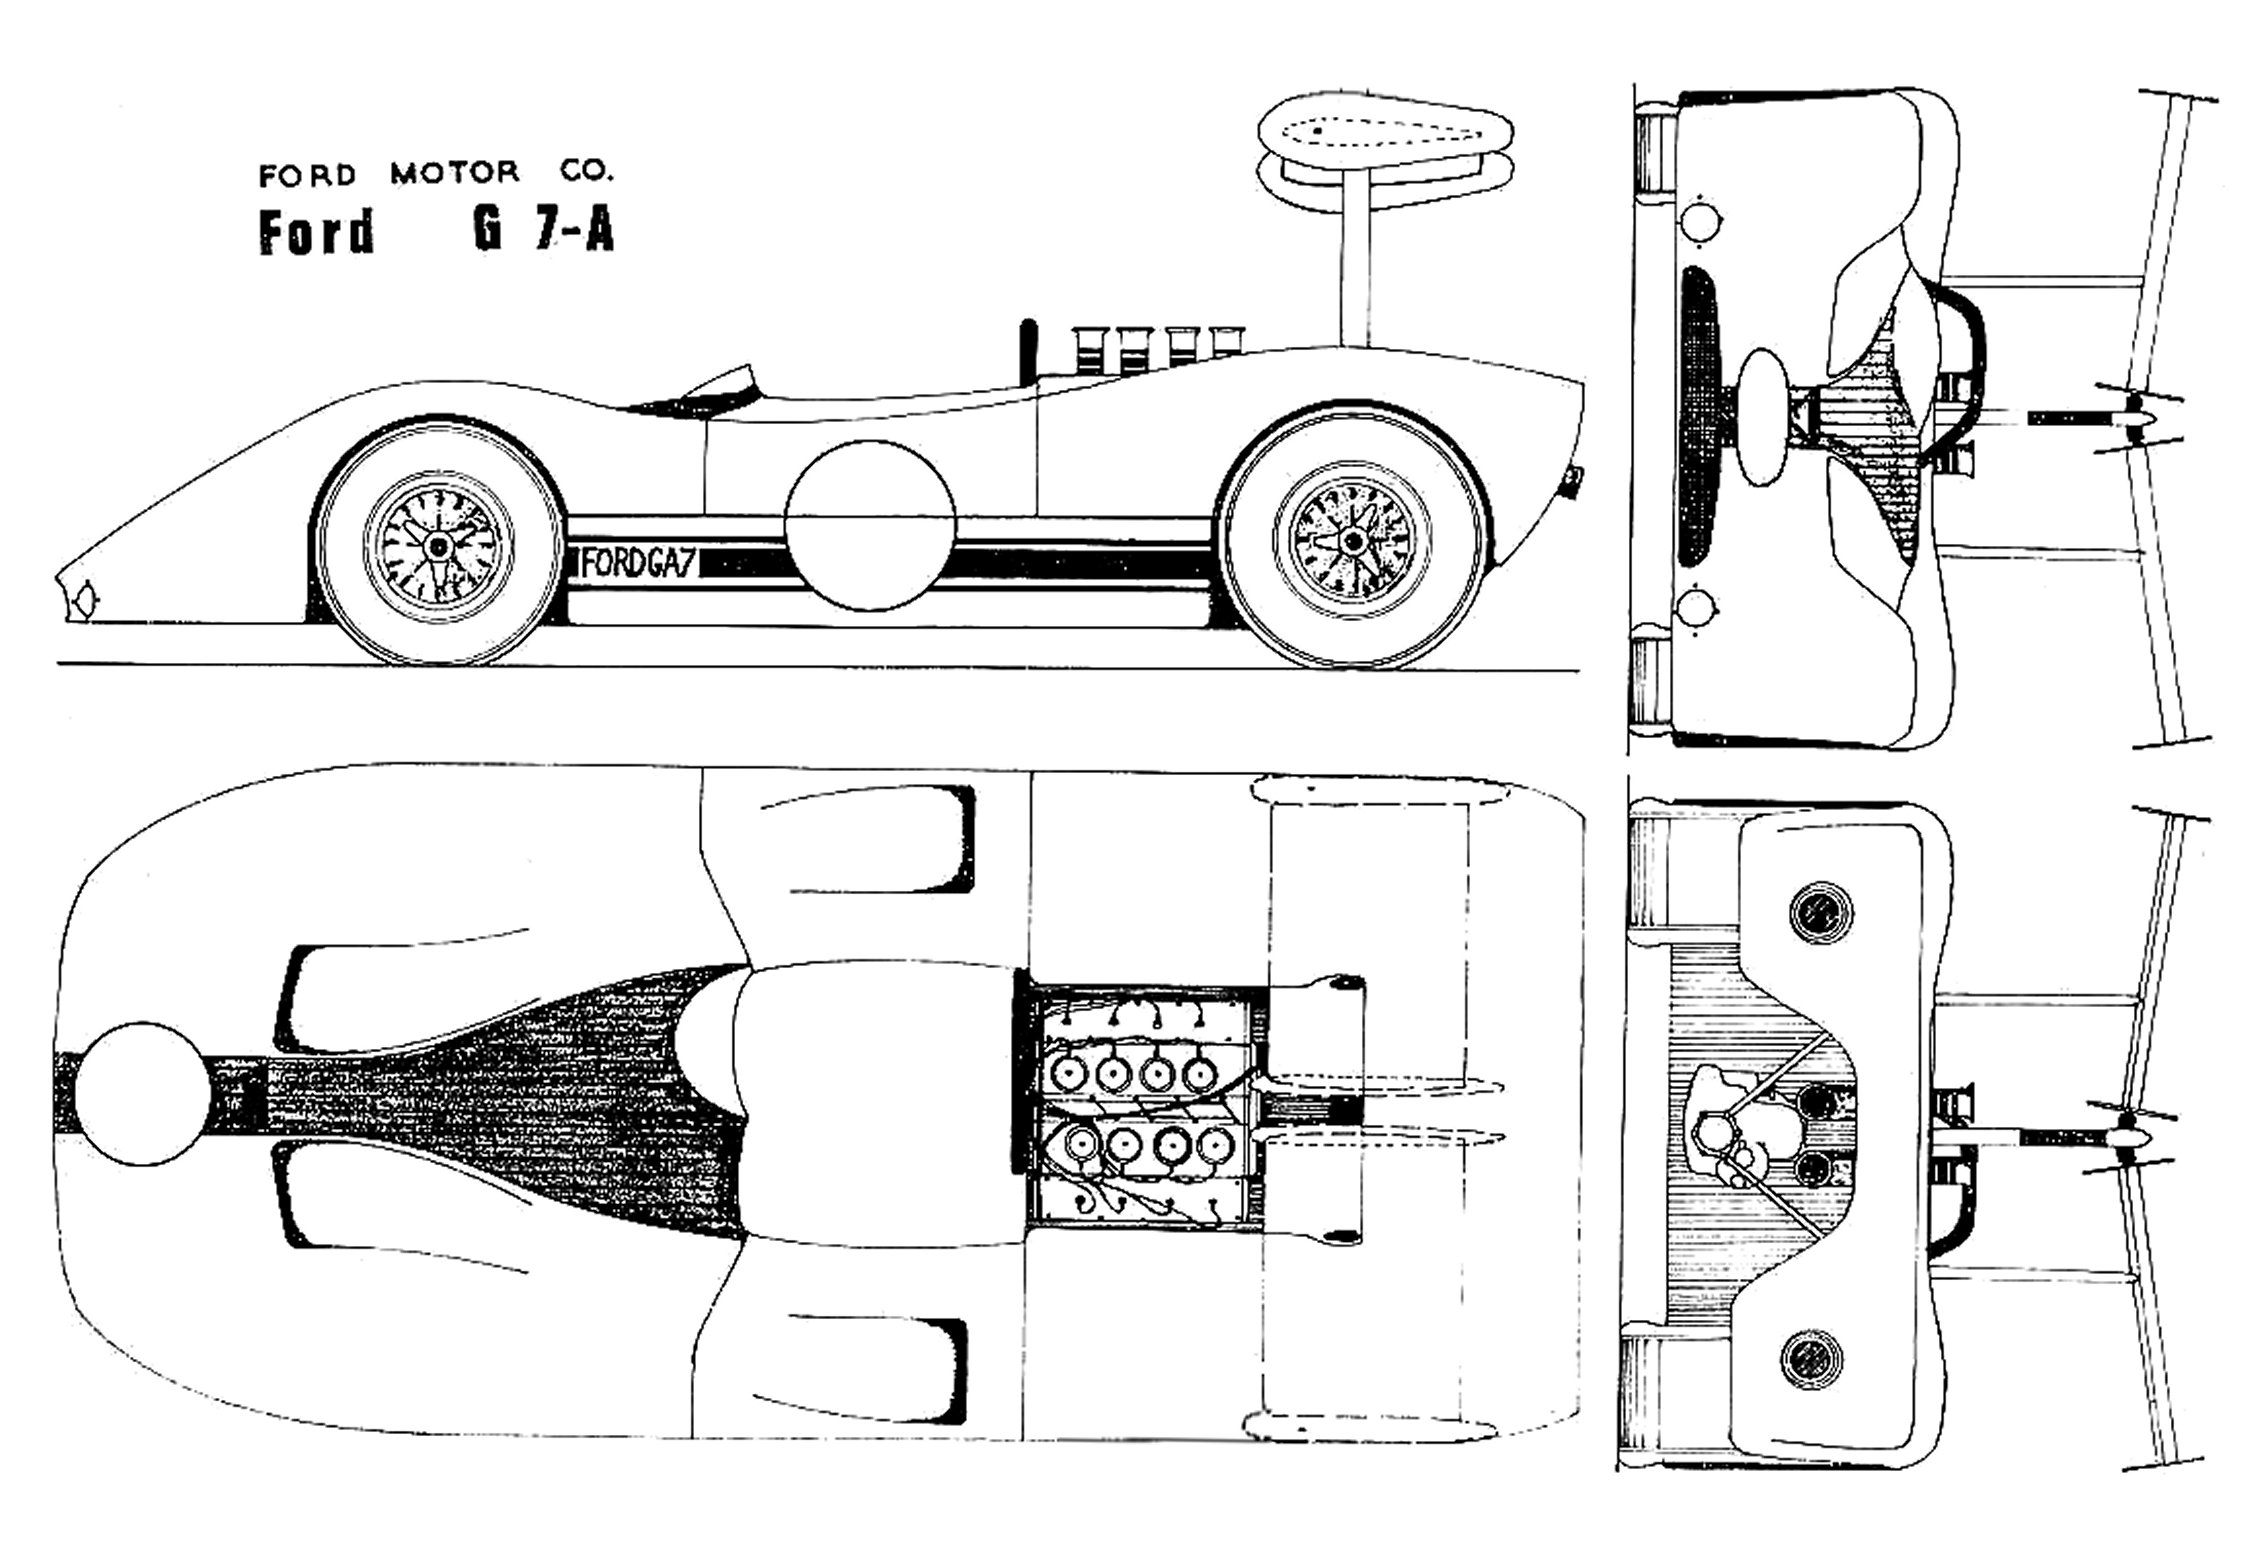 Ford G7A blueprint